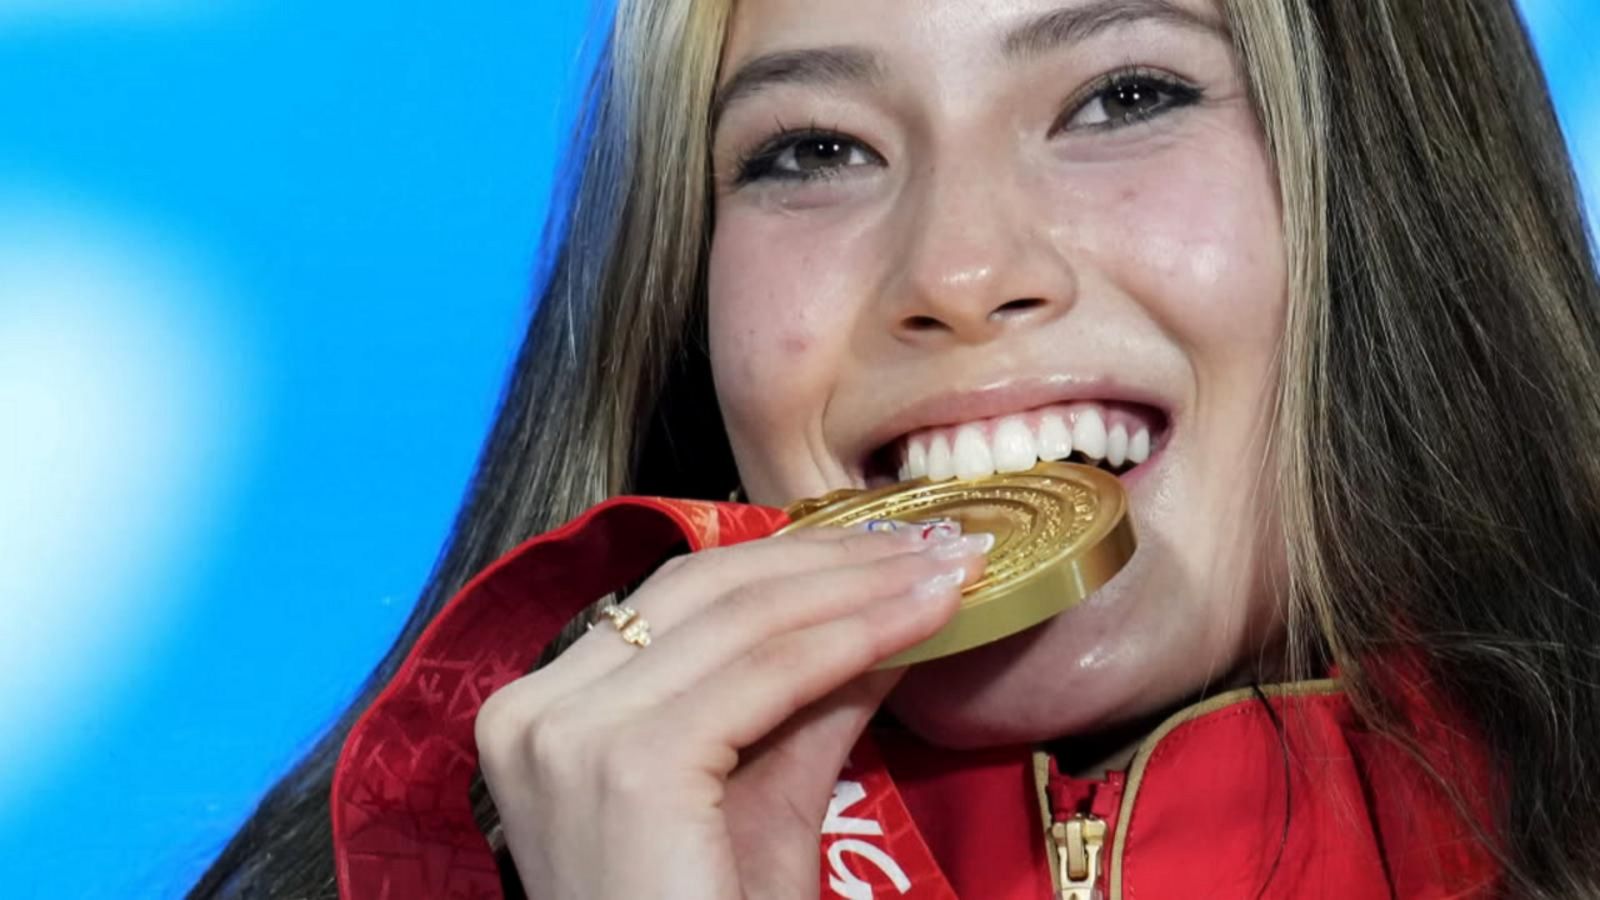 Winter Olympic star and Victoria's Secret model Eileen Gu in tears